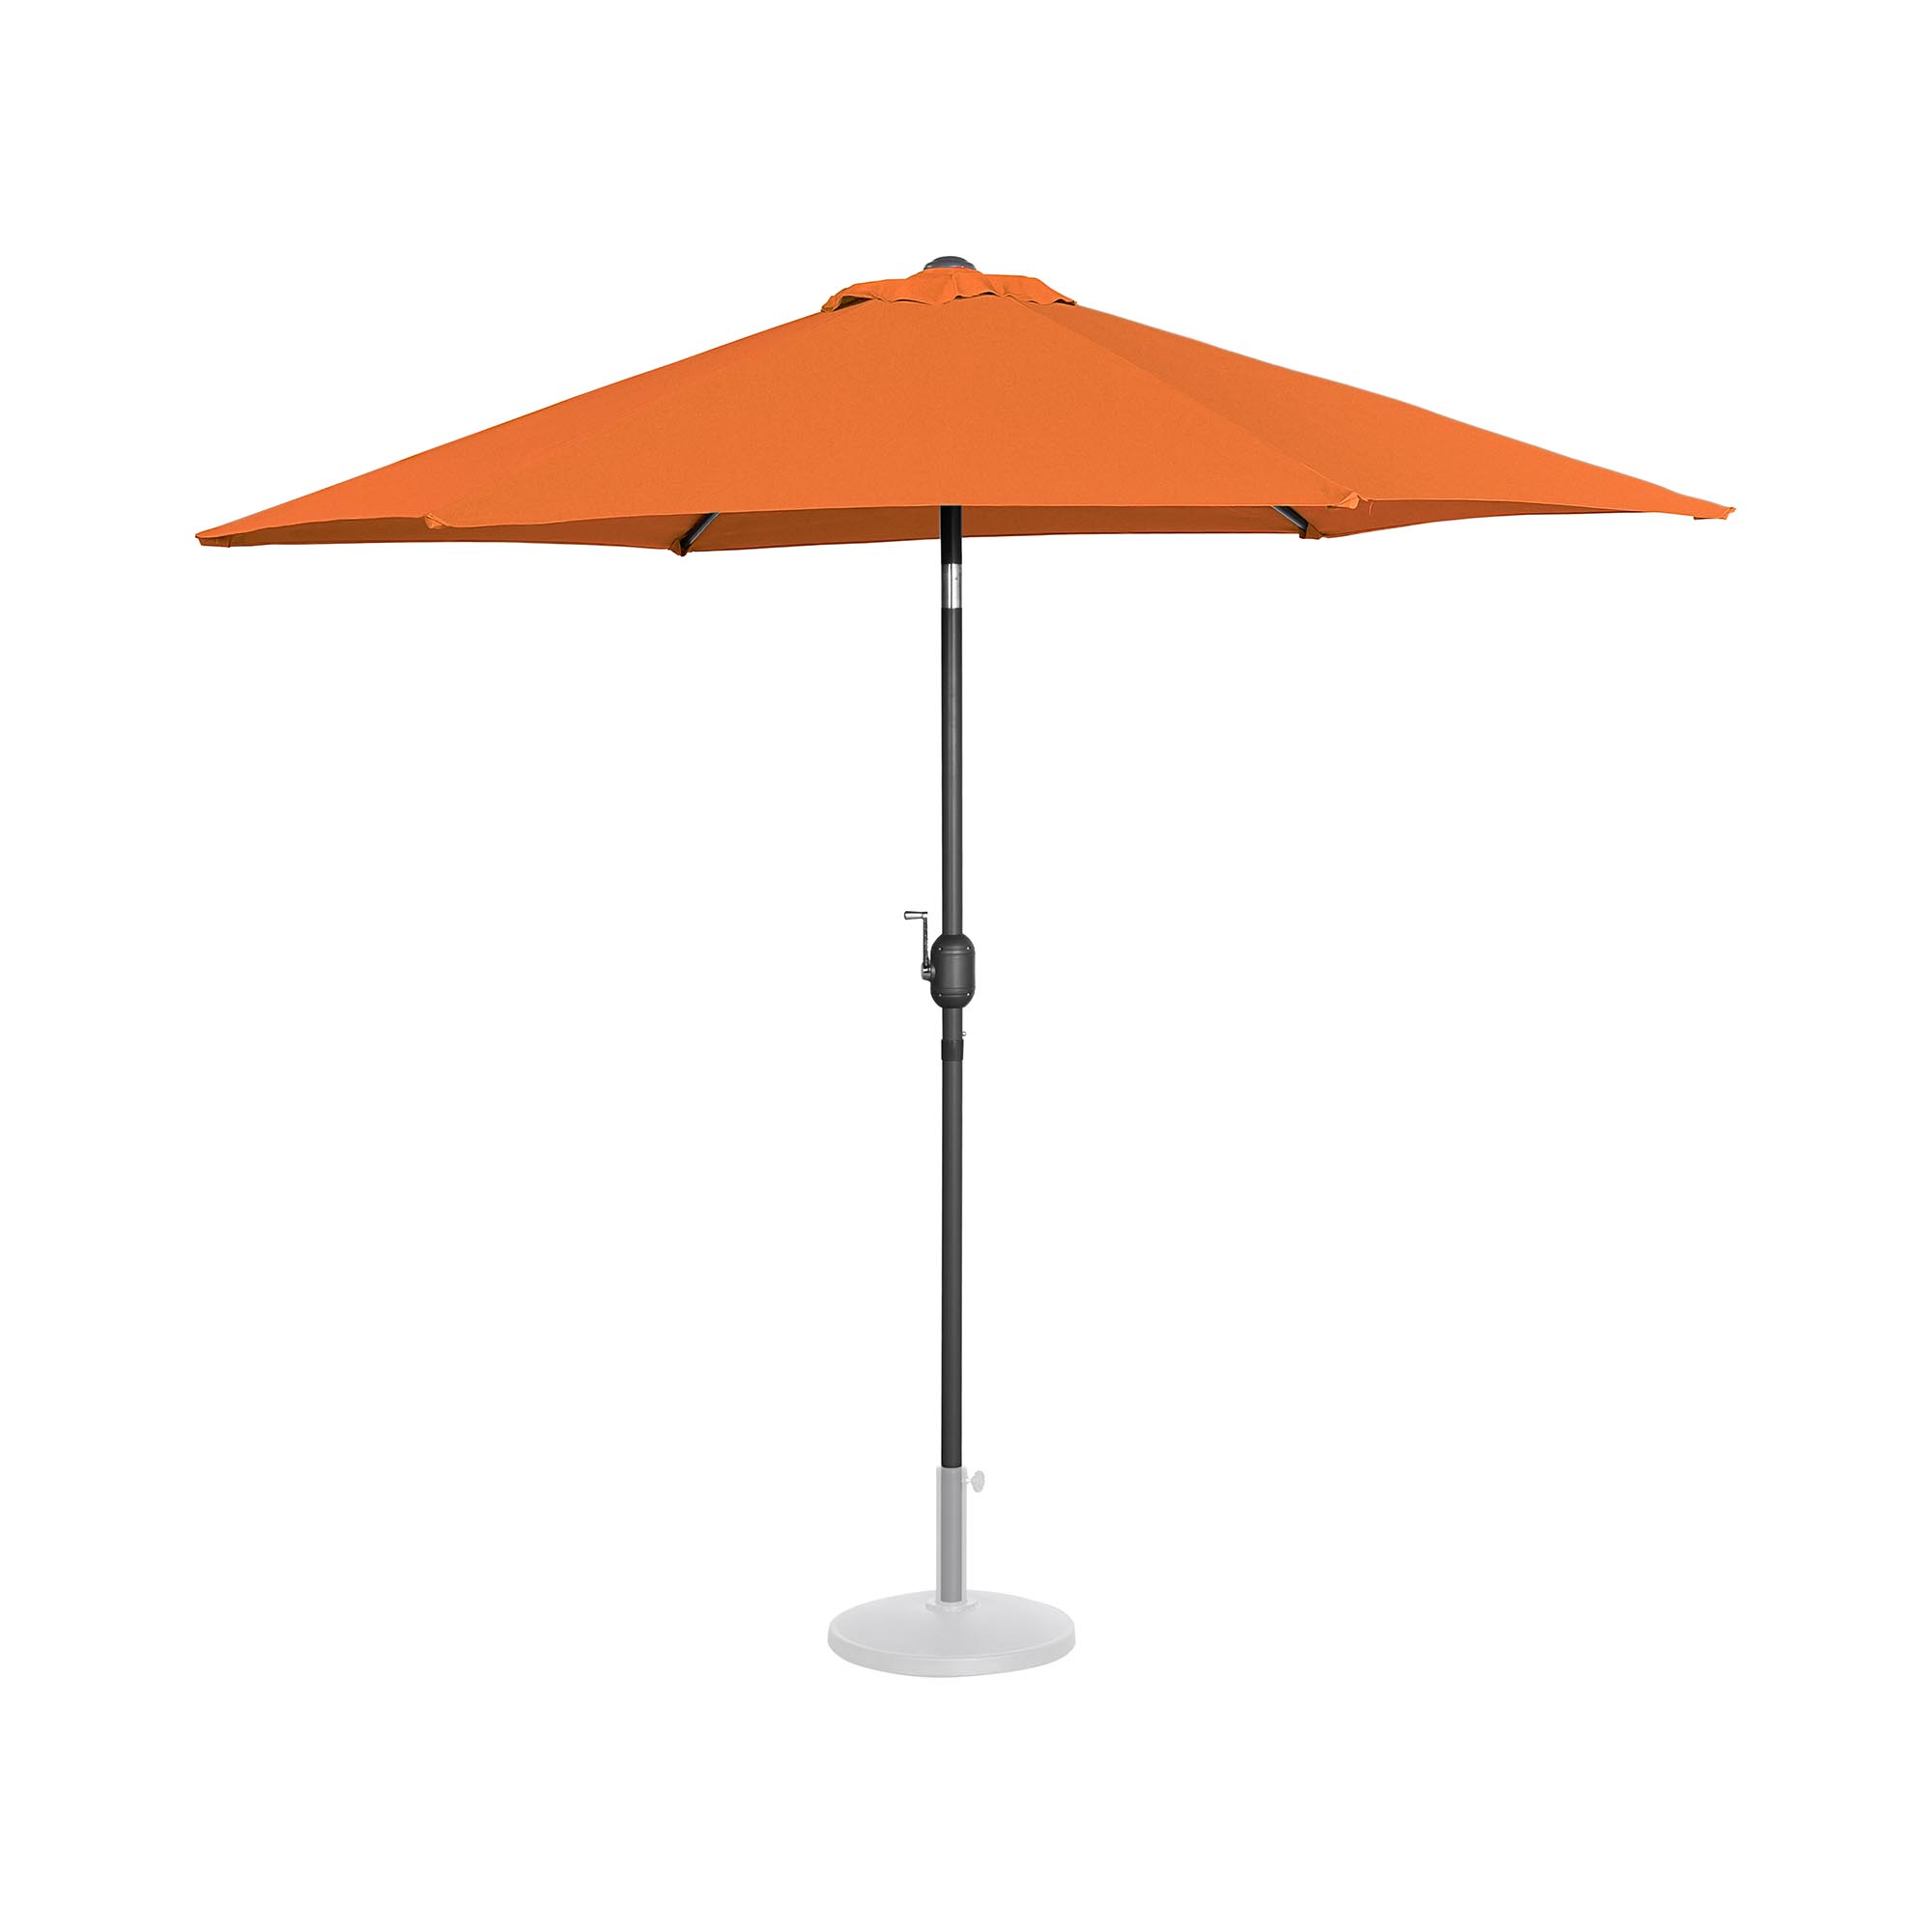 Uniprodo Velký slunečník - oranžový - šestihranný - Ø 270 cm - naklápěcí UNI UMBRELLA R270OR N